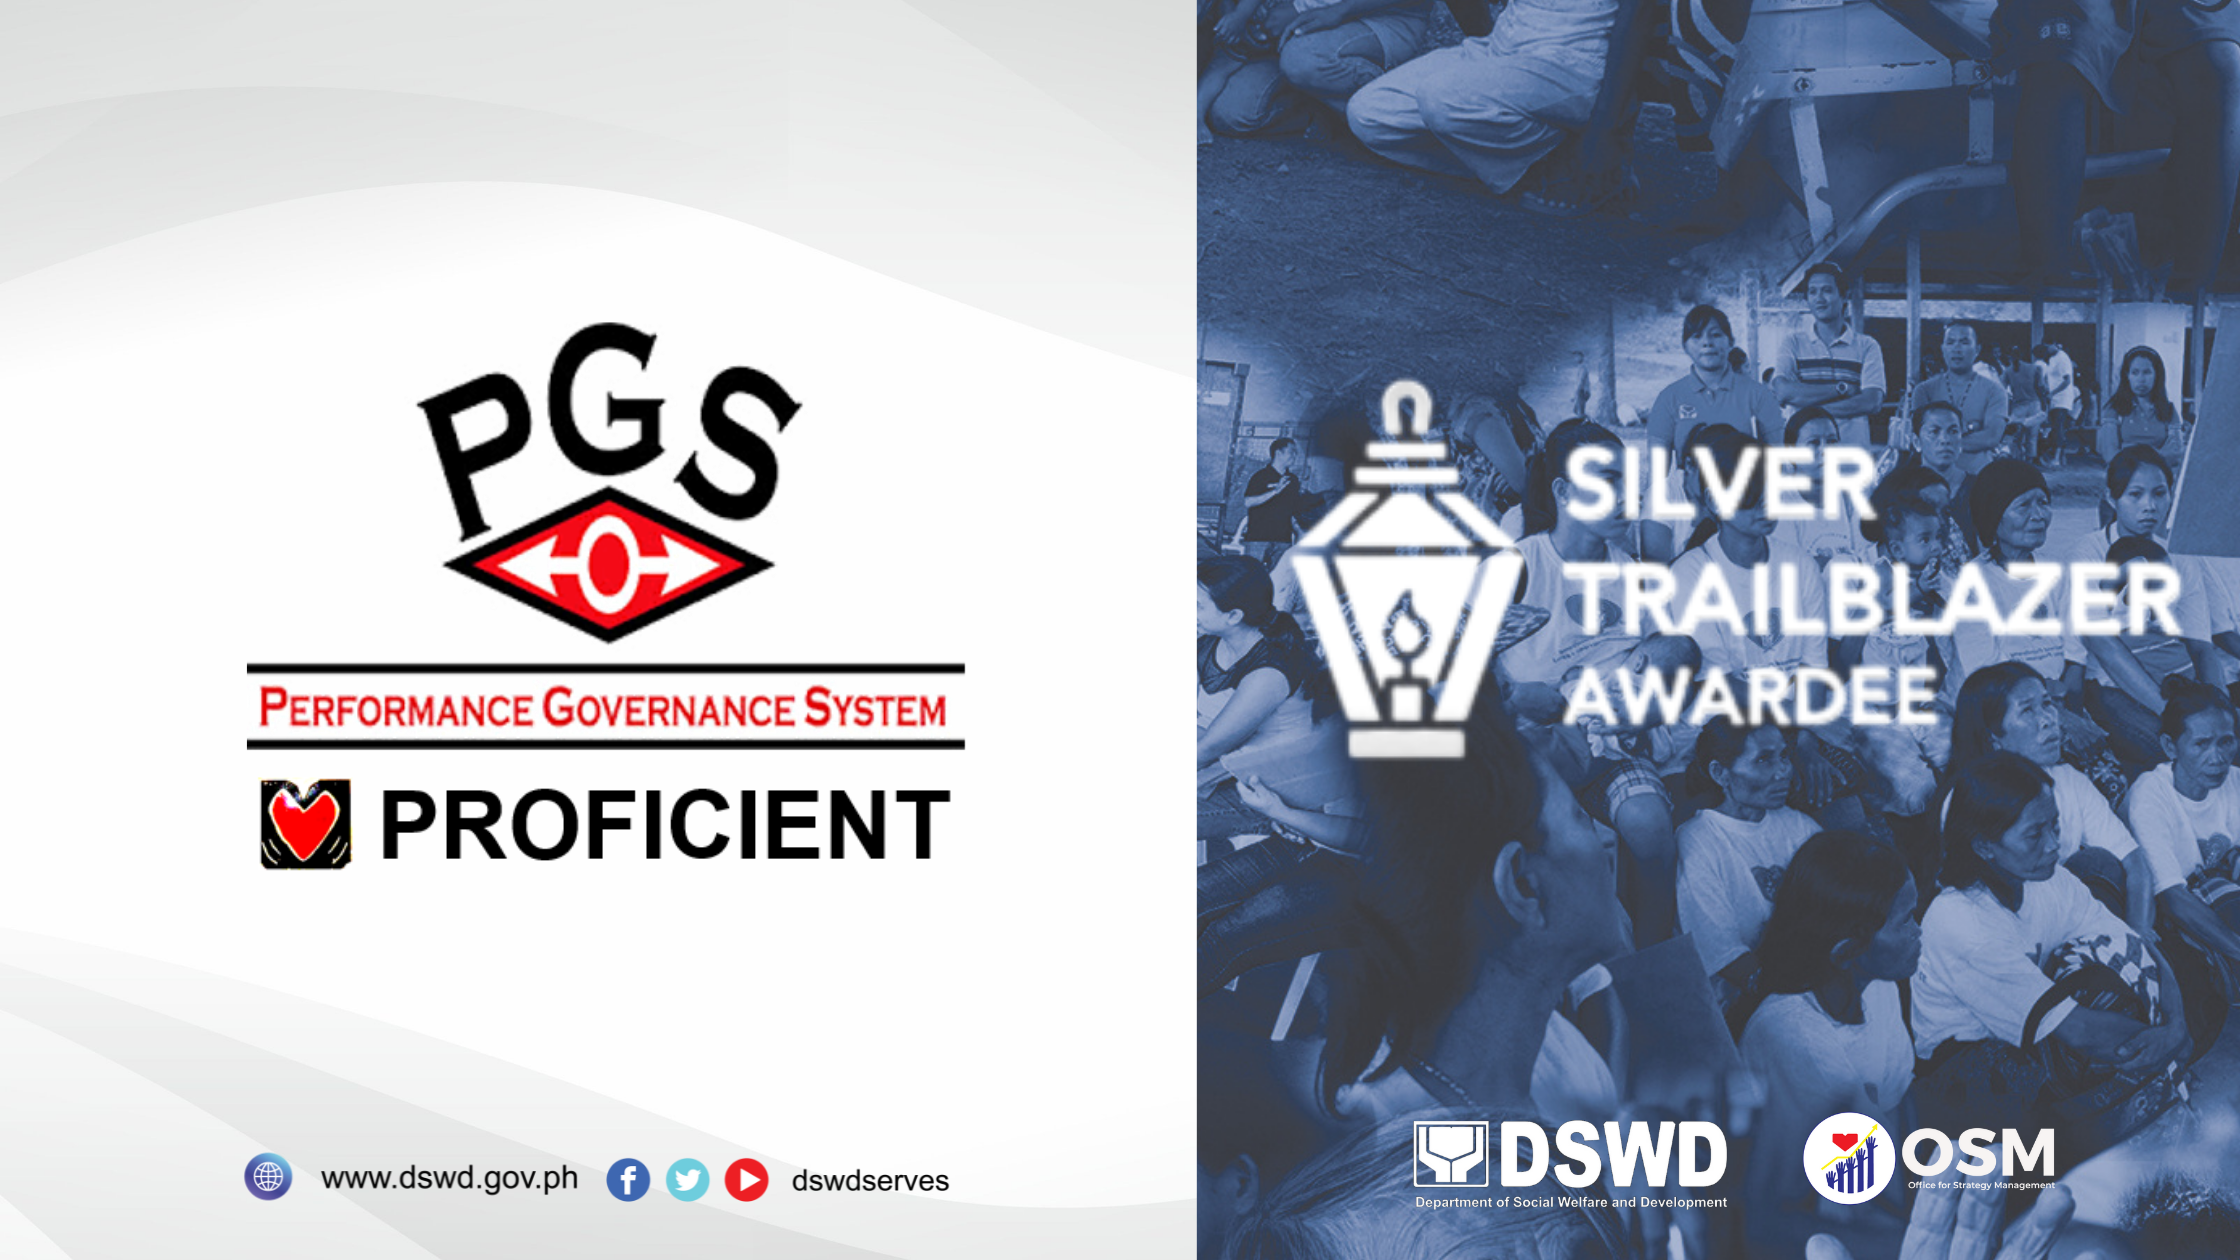 PGS Proficient and silver trailblazer